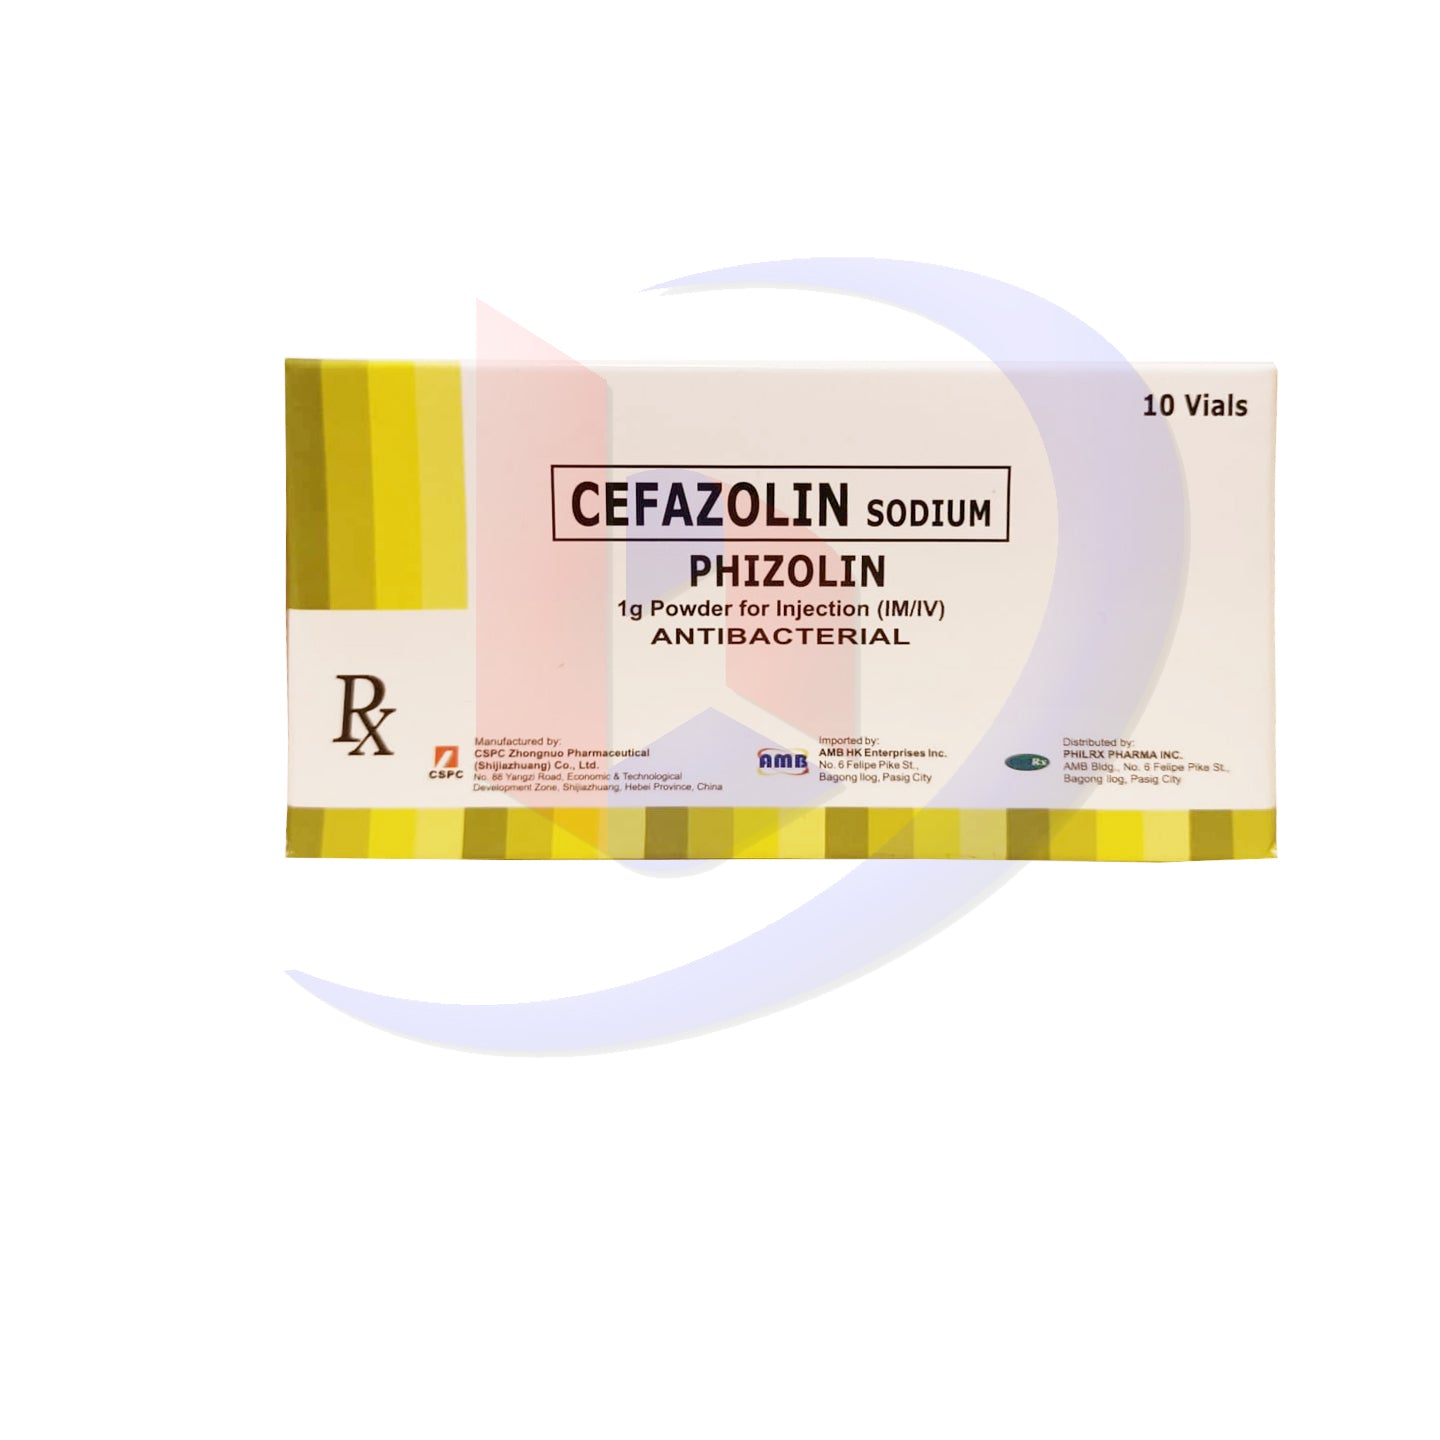 Cefazolin Sodium 1g Powder for Injection (I.M/I.V) Antibacterial Vials 10's